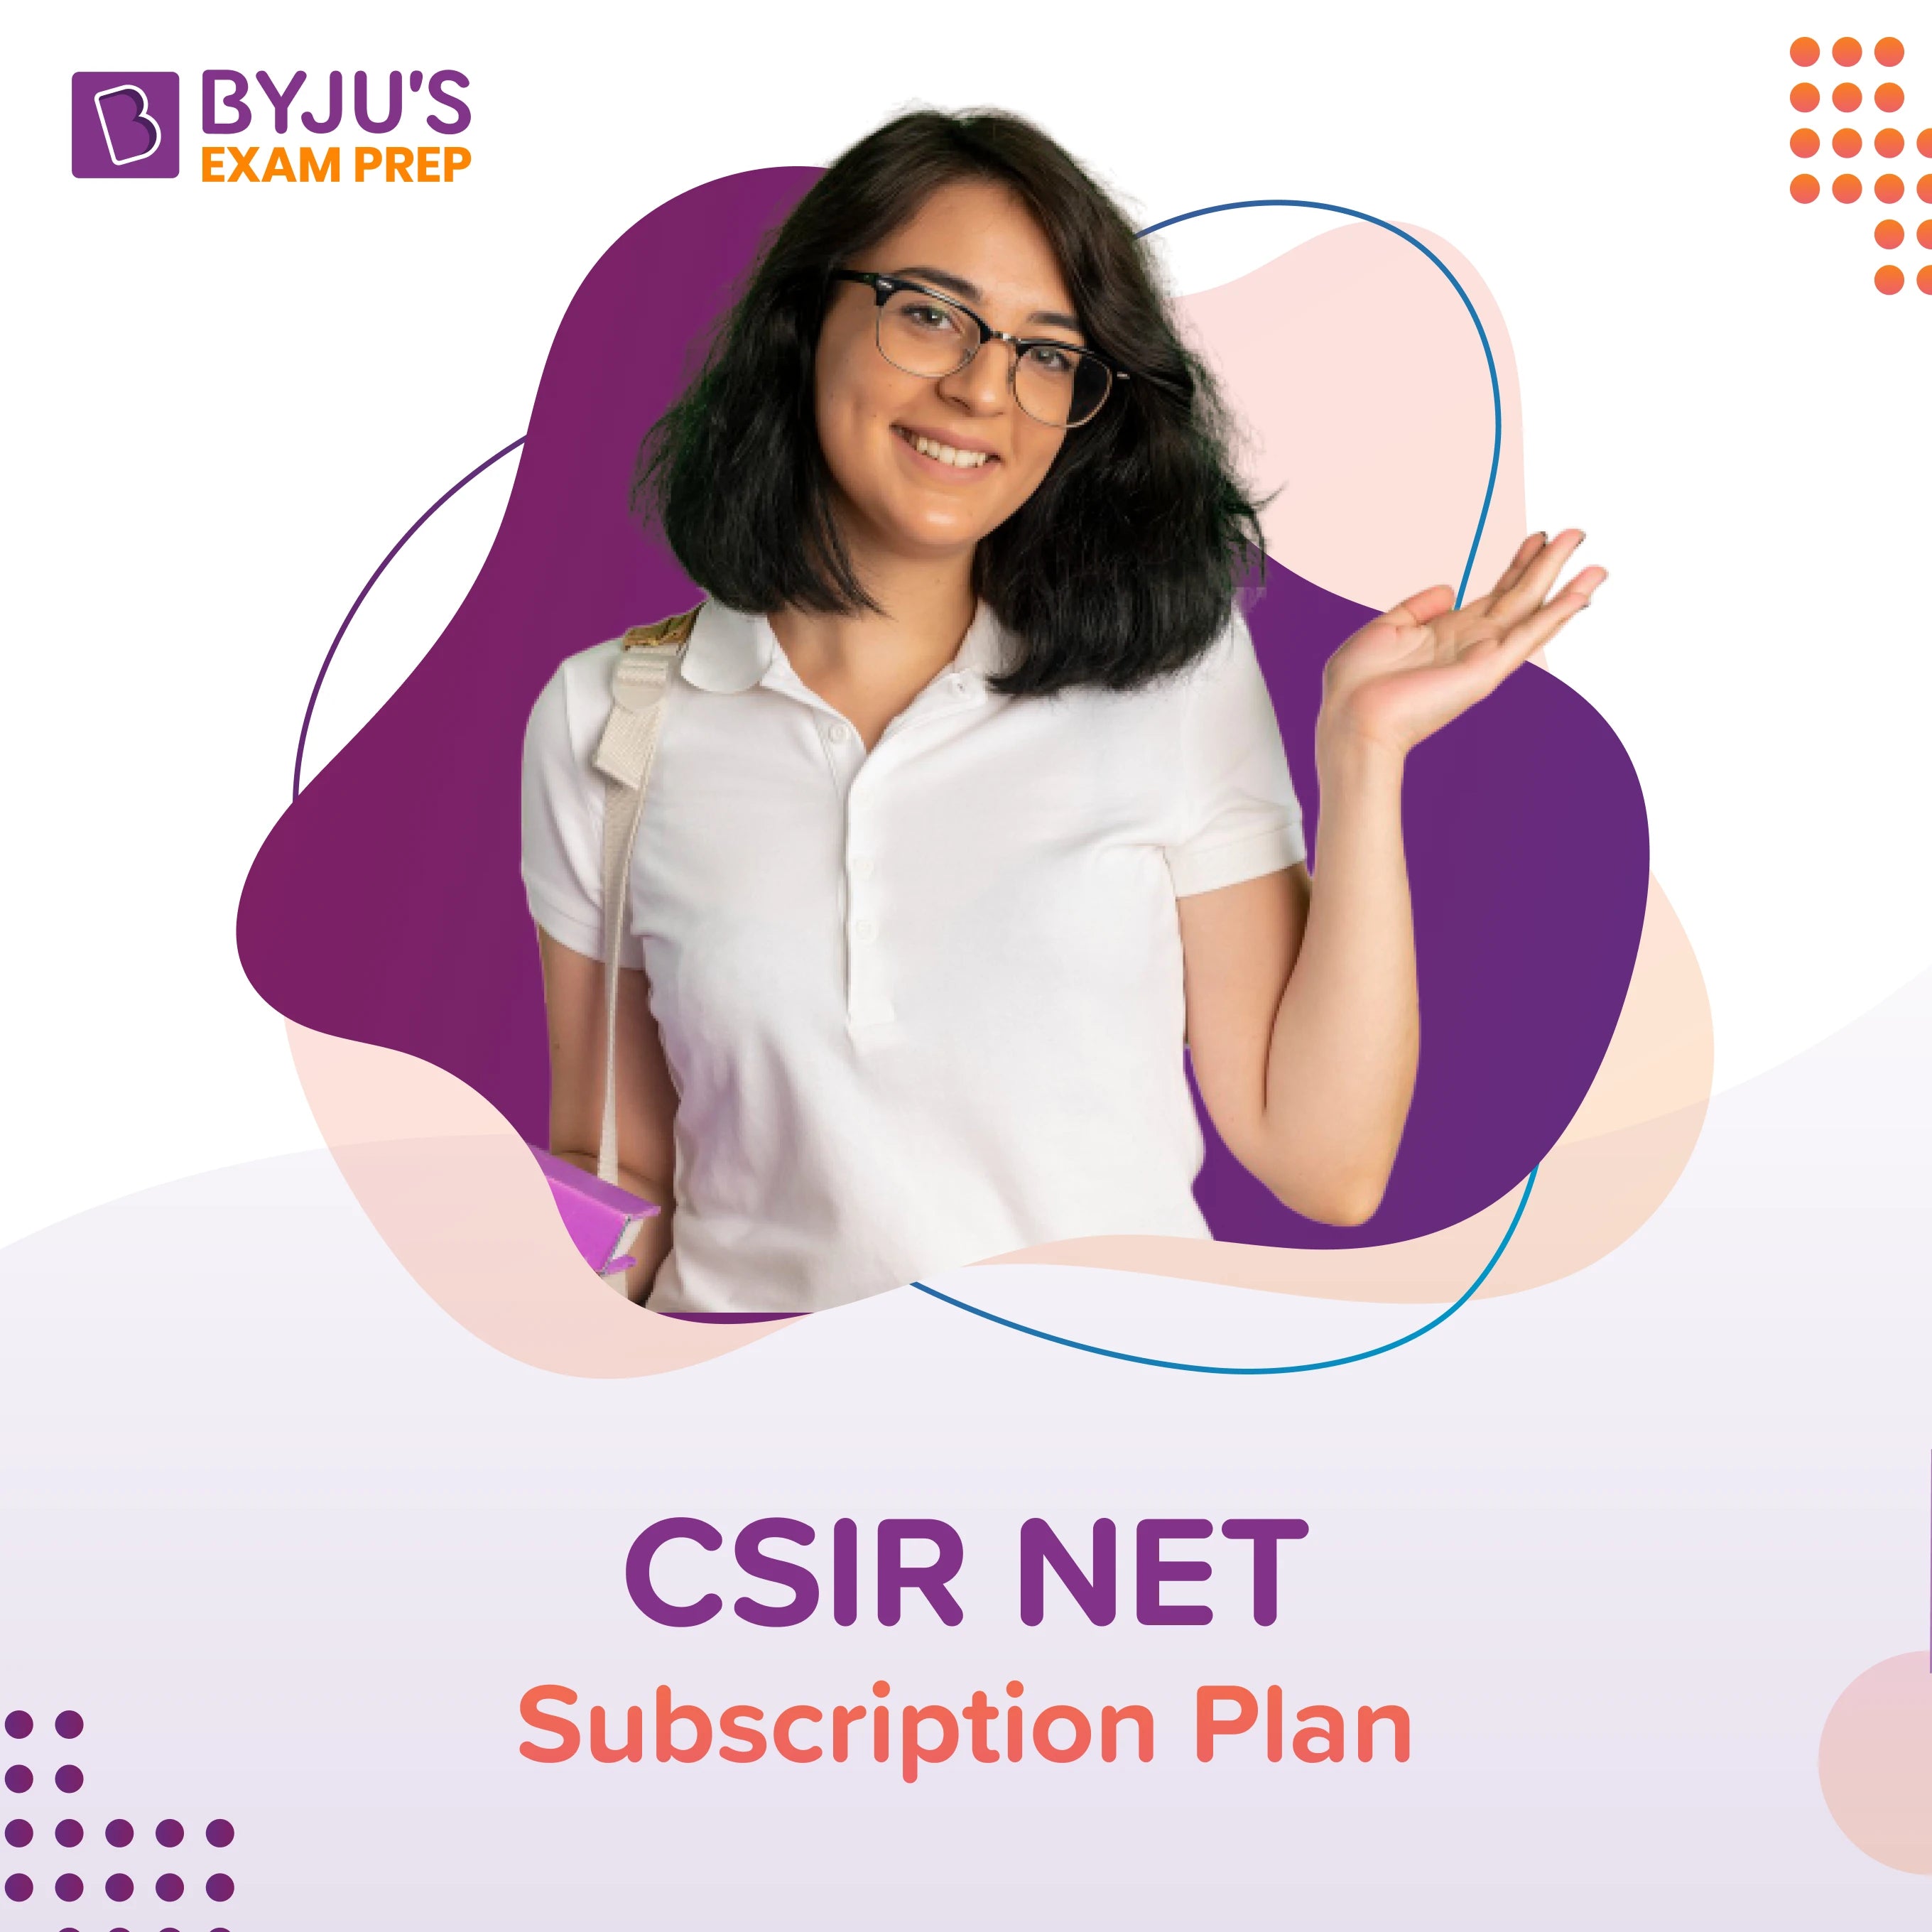 CSIR NET - Subscription Plan